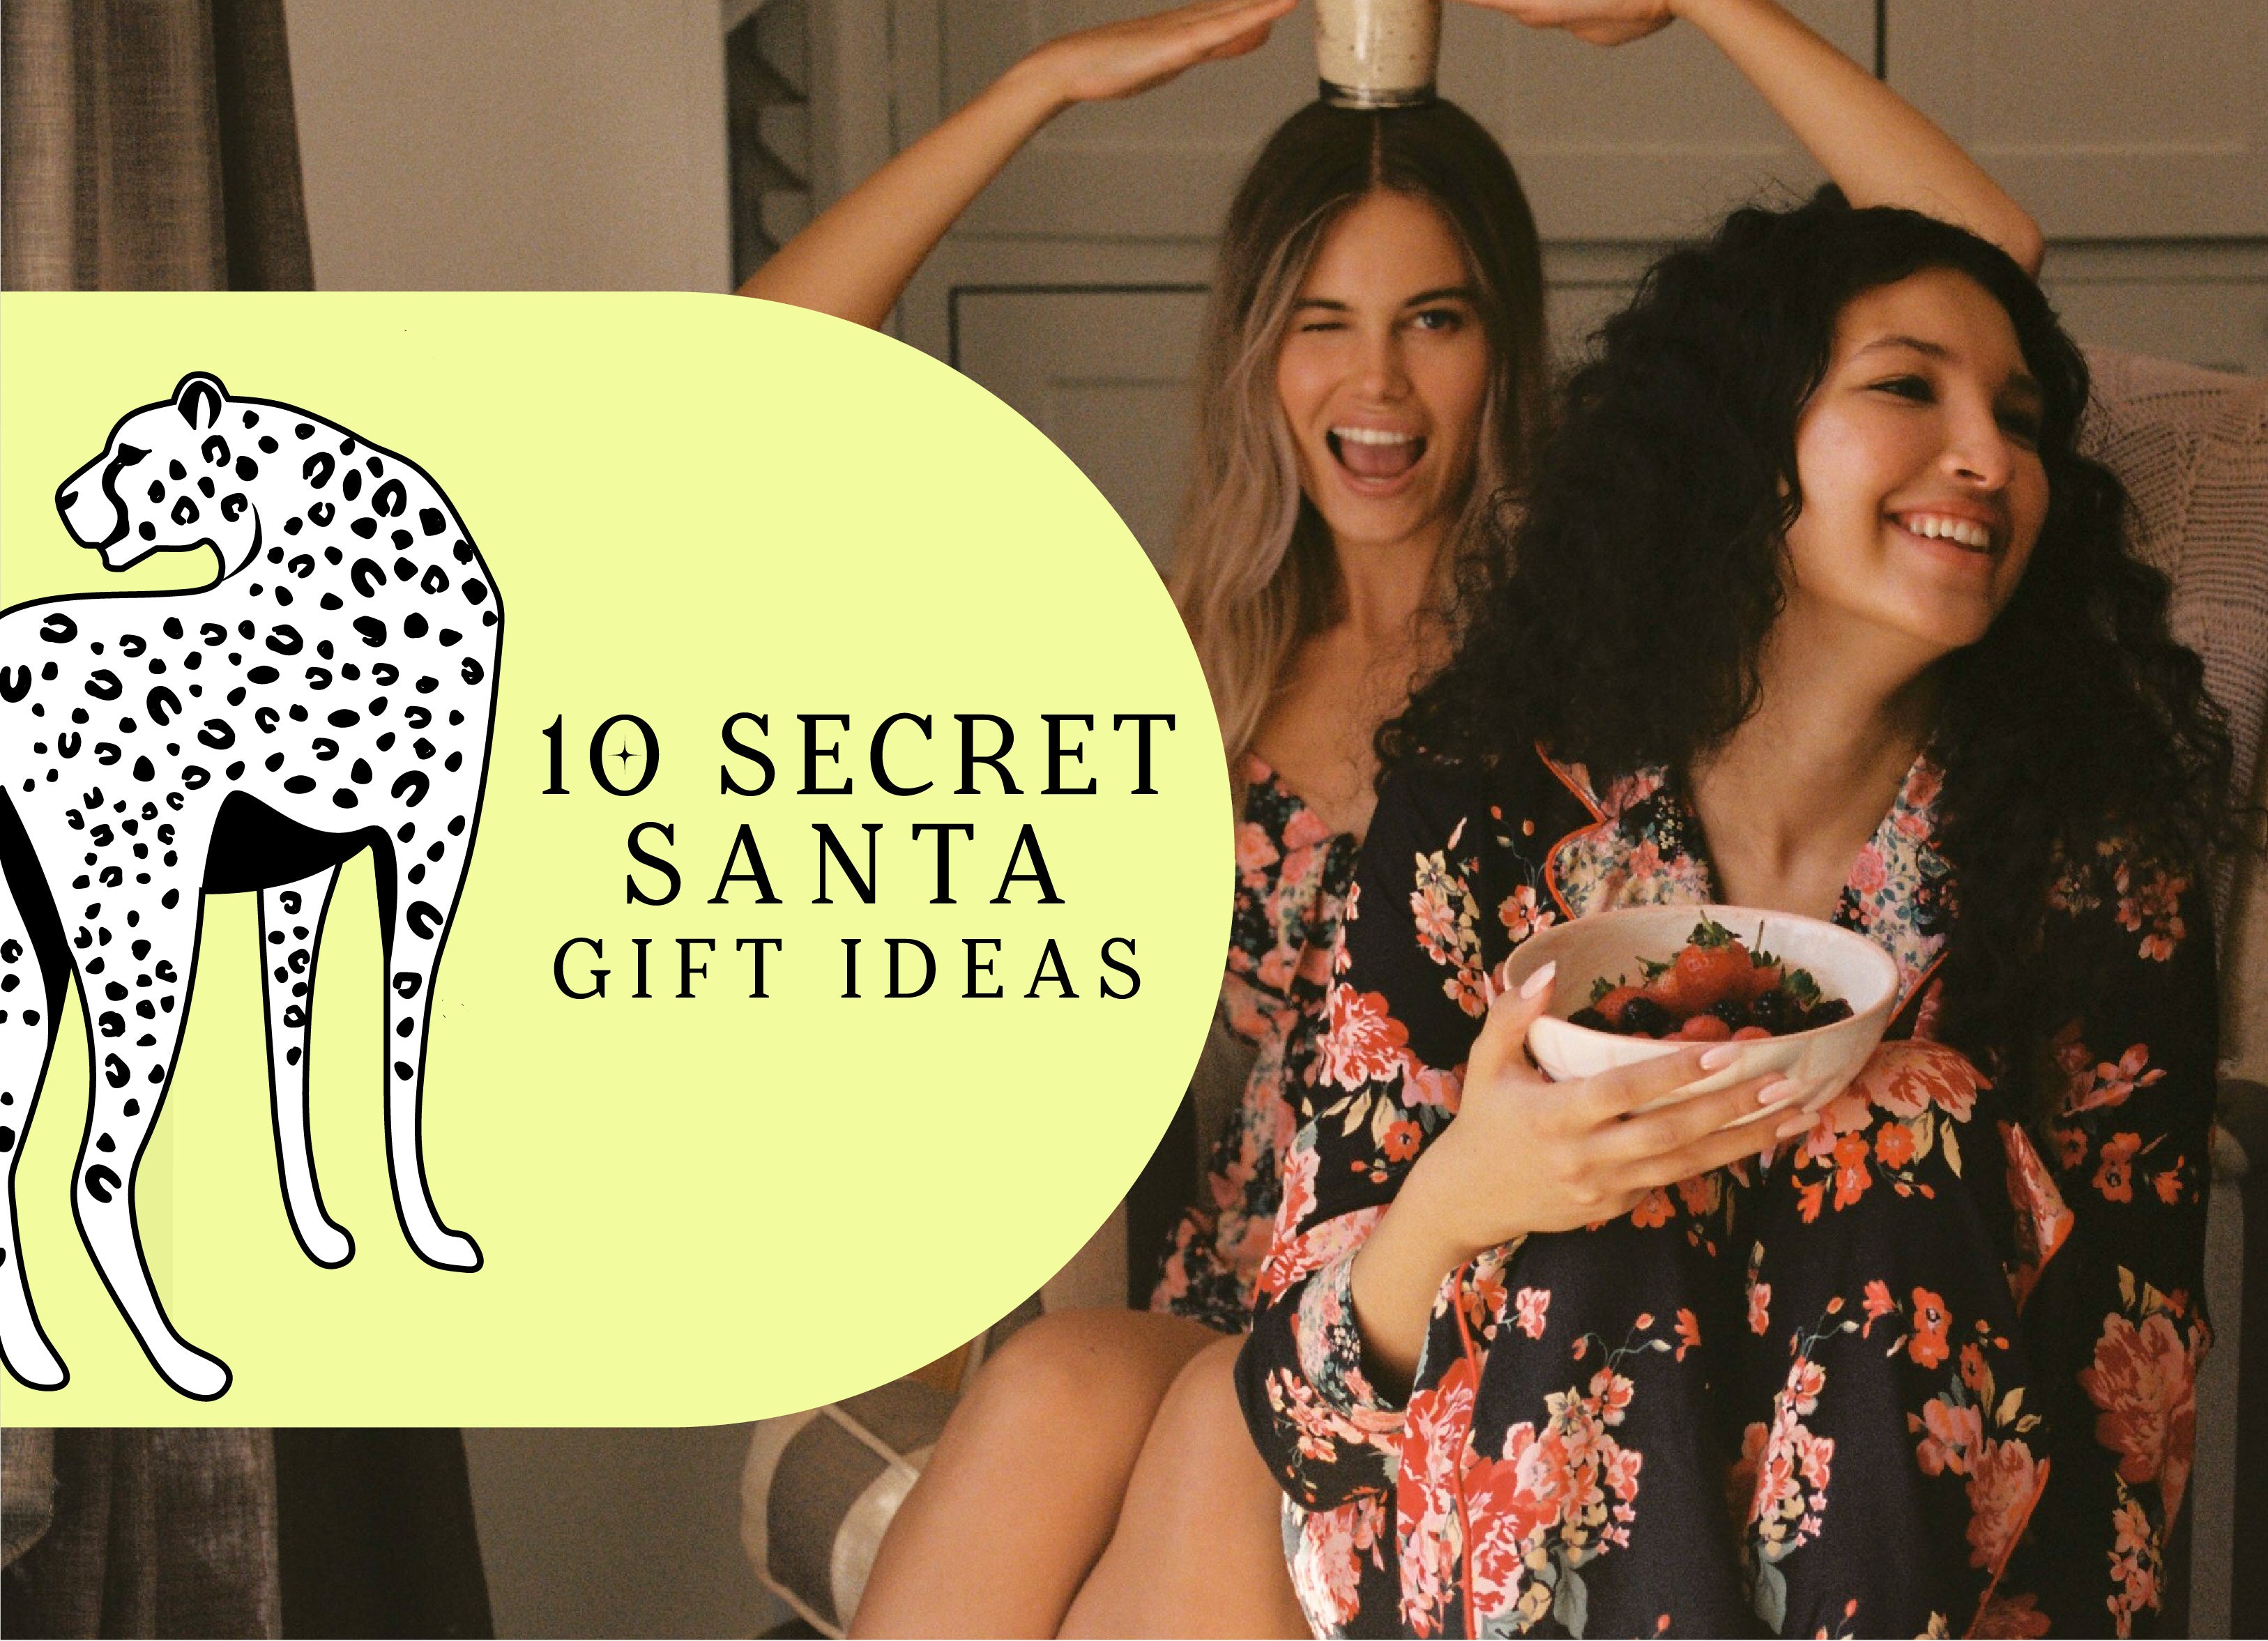 10 SECRET SANTA GIFT IDEAS